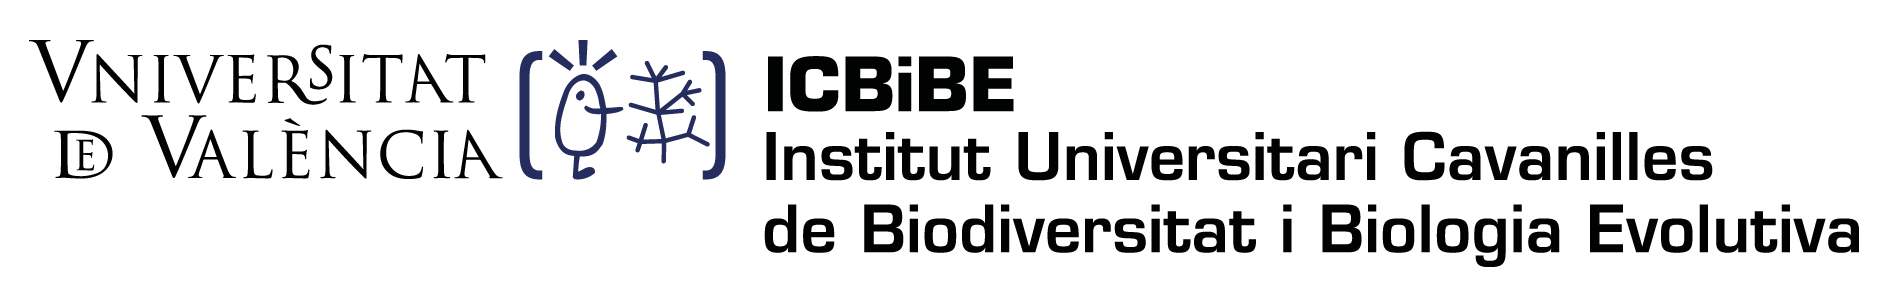 Cavanilles Institute of Biodiversity and Evolutionary Biology (UV)